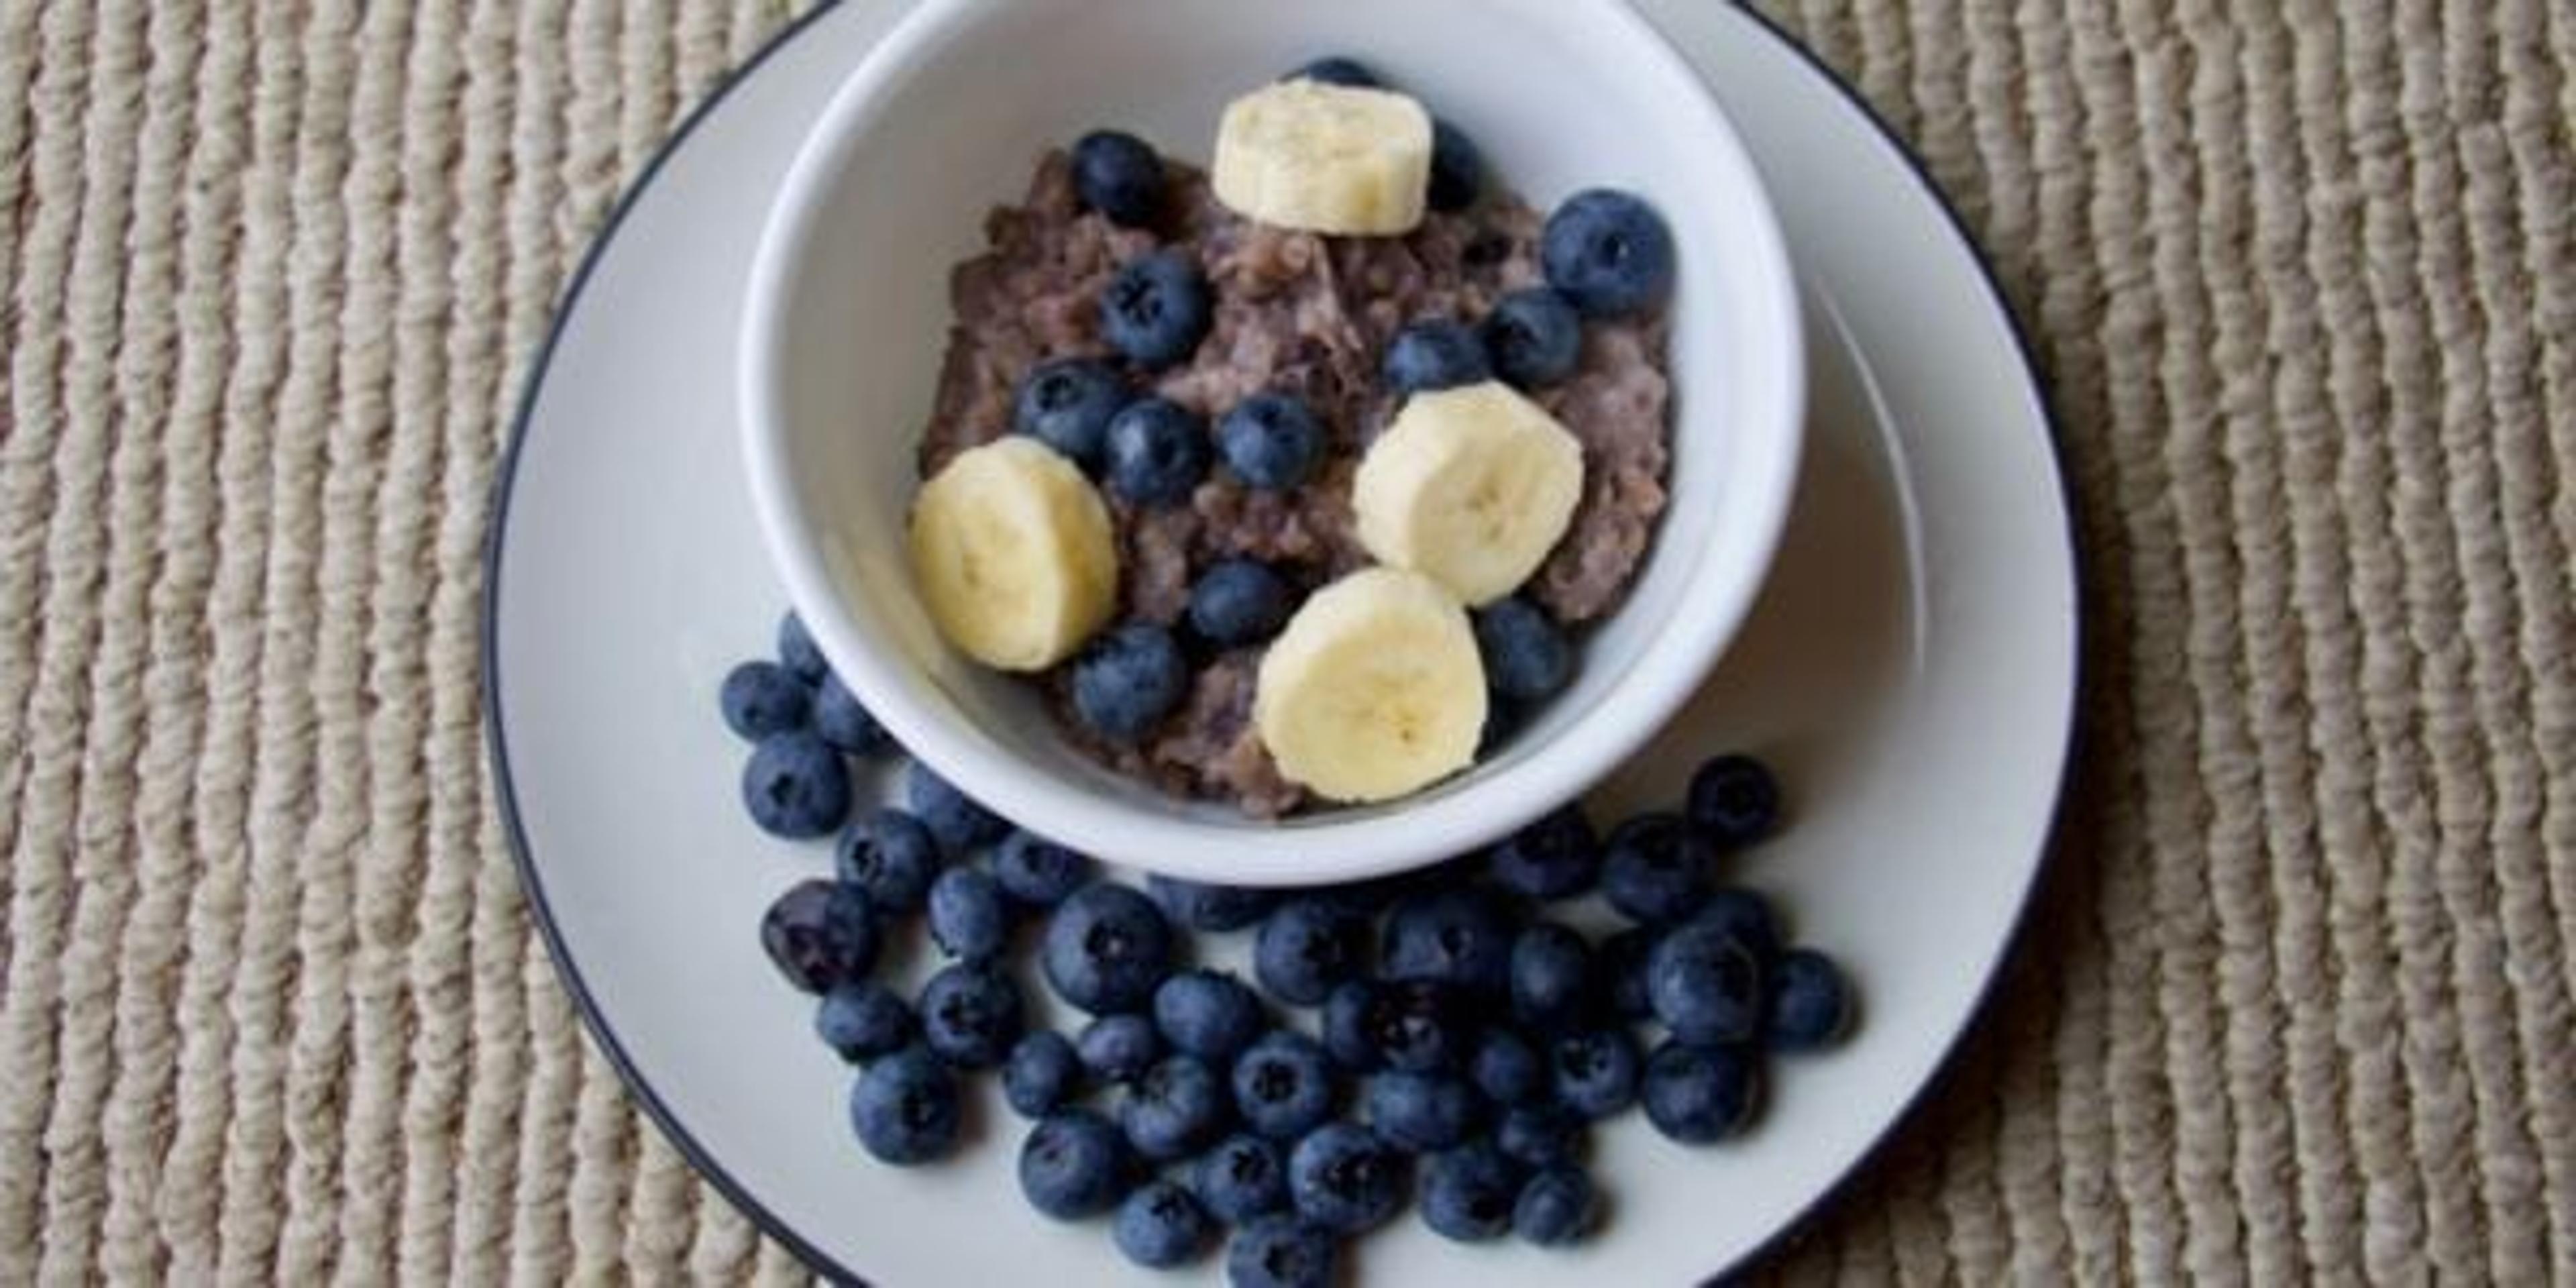 Image of blueberry, banana and quinoa oatmeal